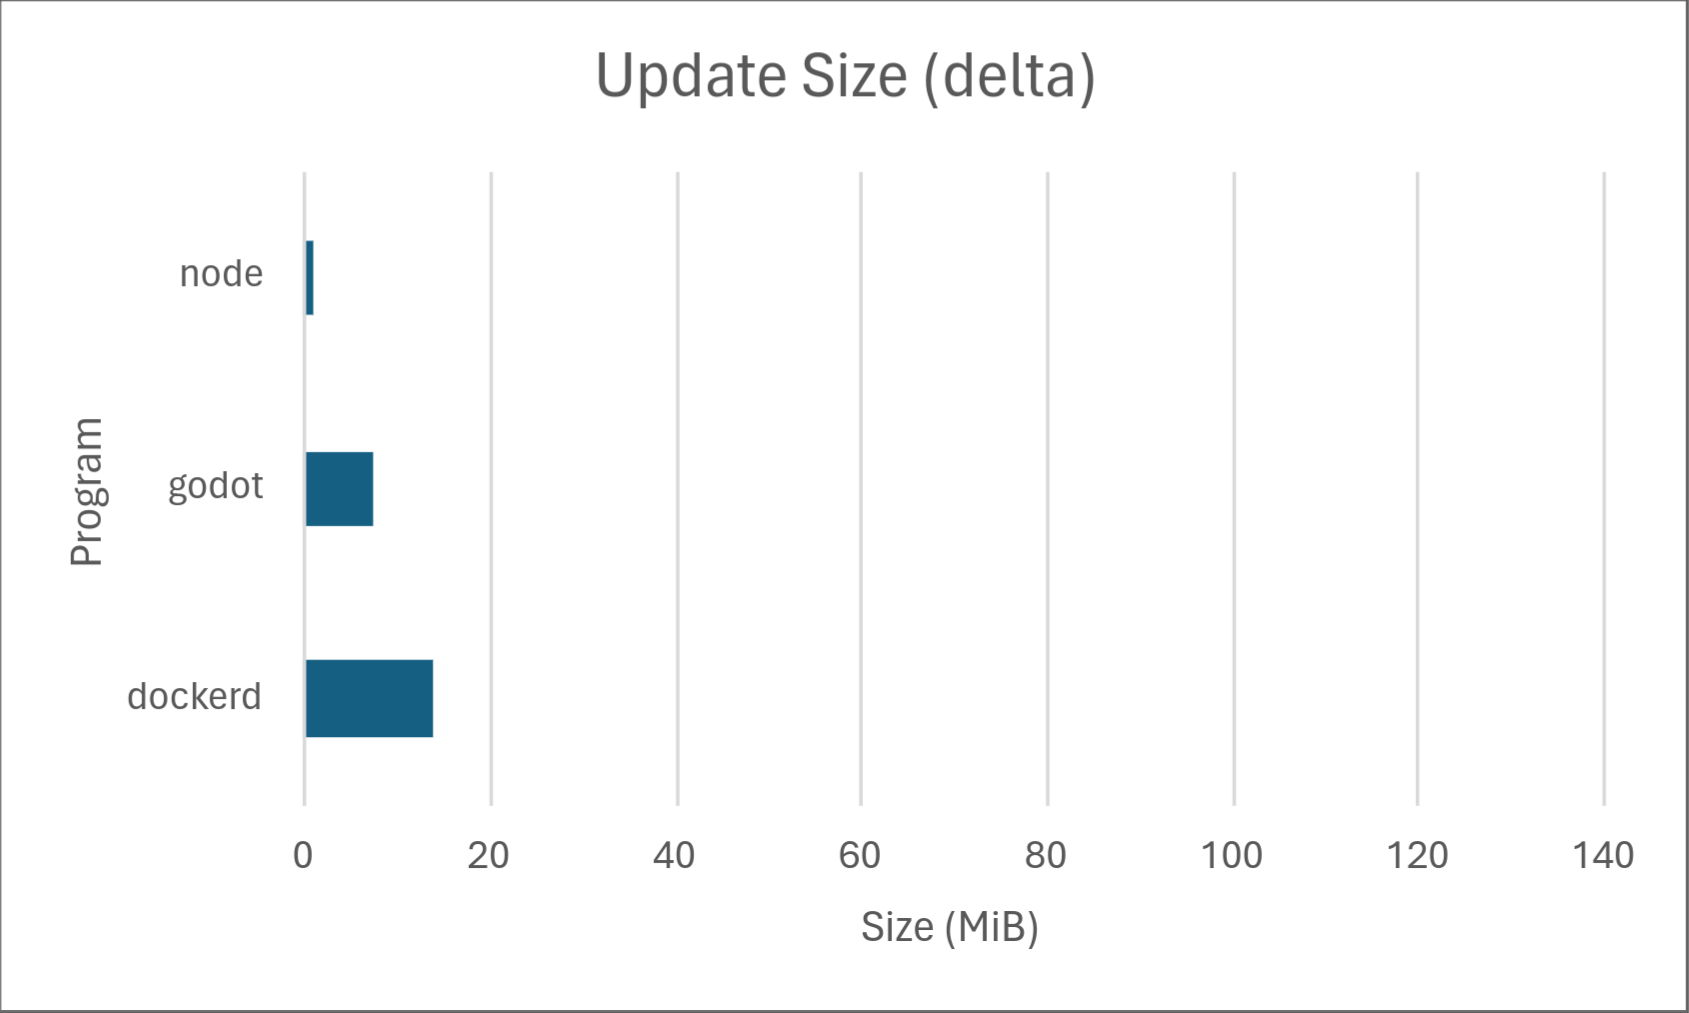 Delta update sizes for various programs